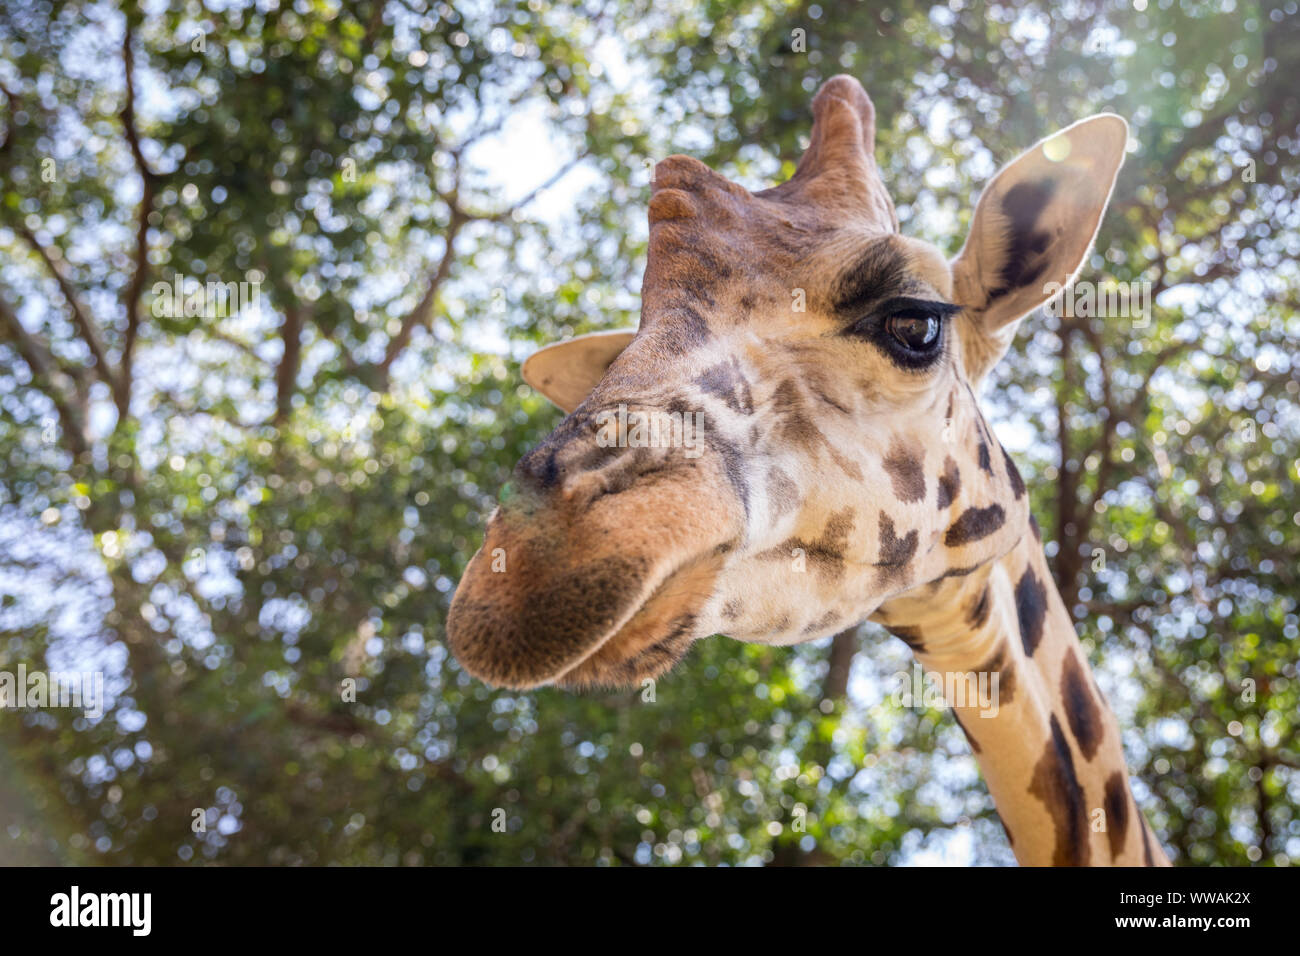 Portrait de girafe looking at camera, Entebbe, Ouganda Banque D'Images